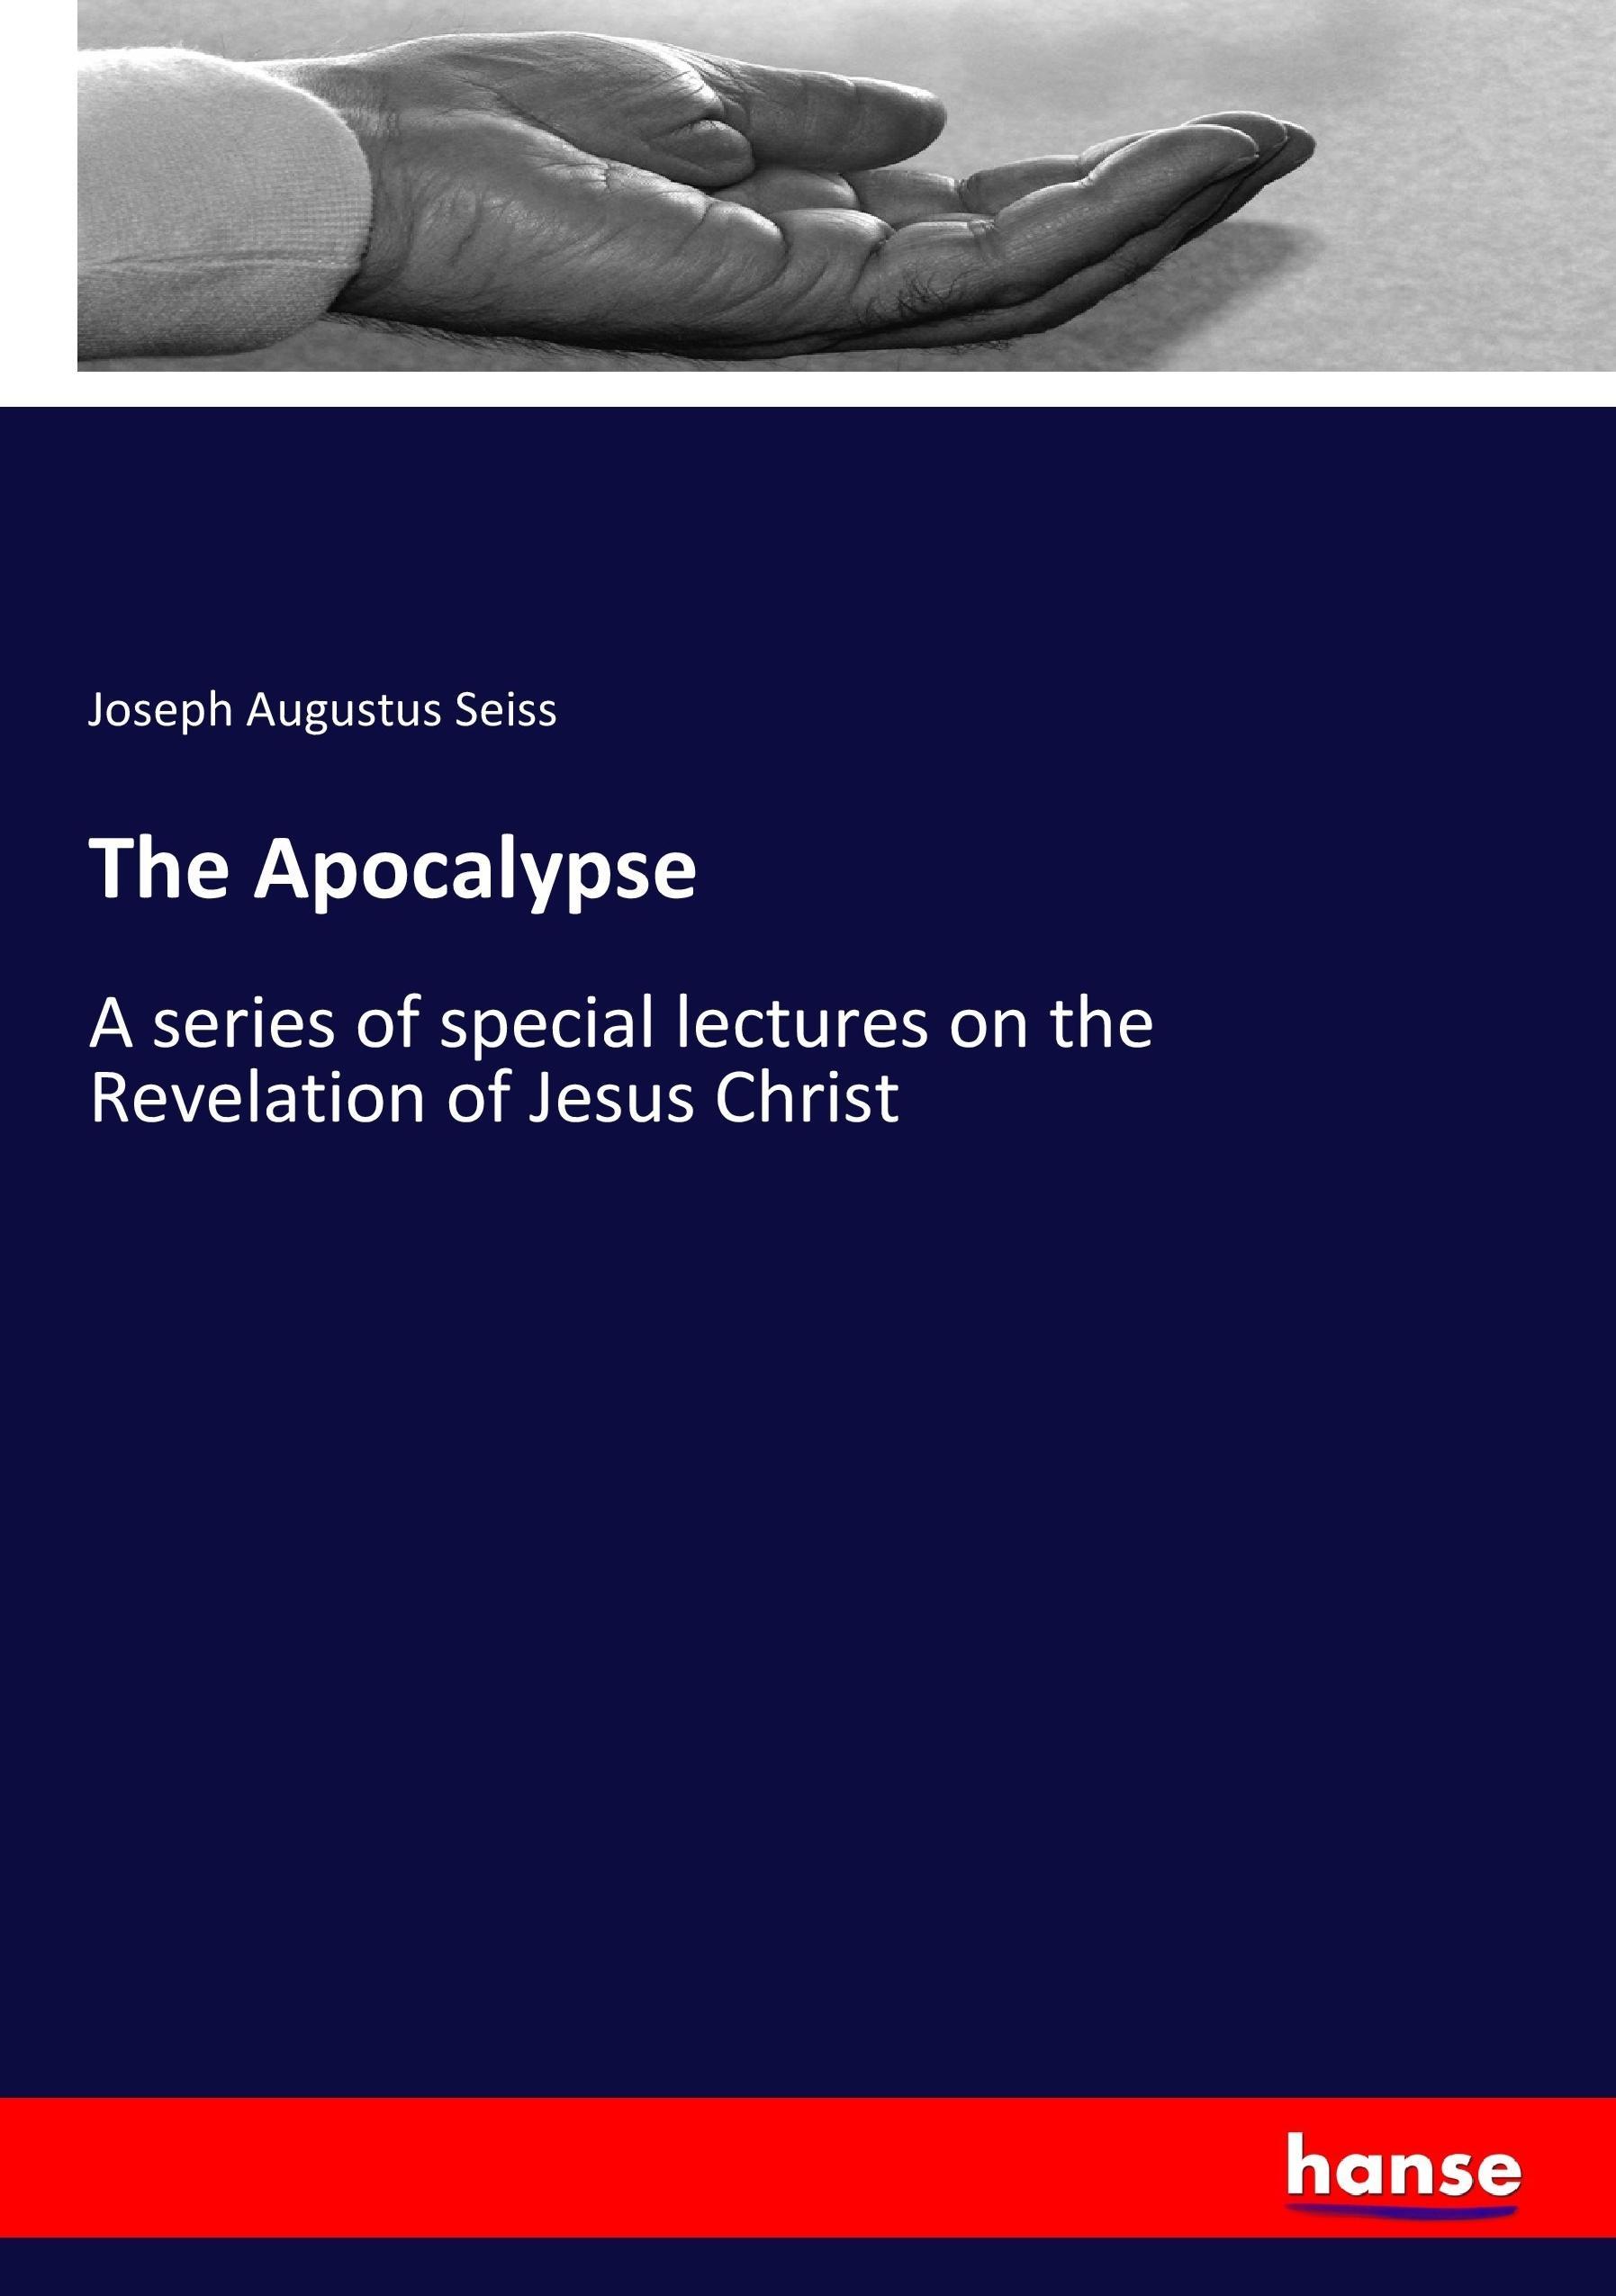 The Apocalypse - Seiss, Joseph Augustus